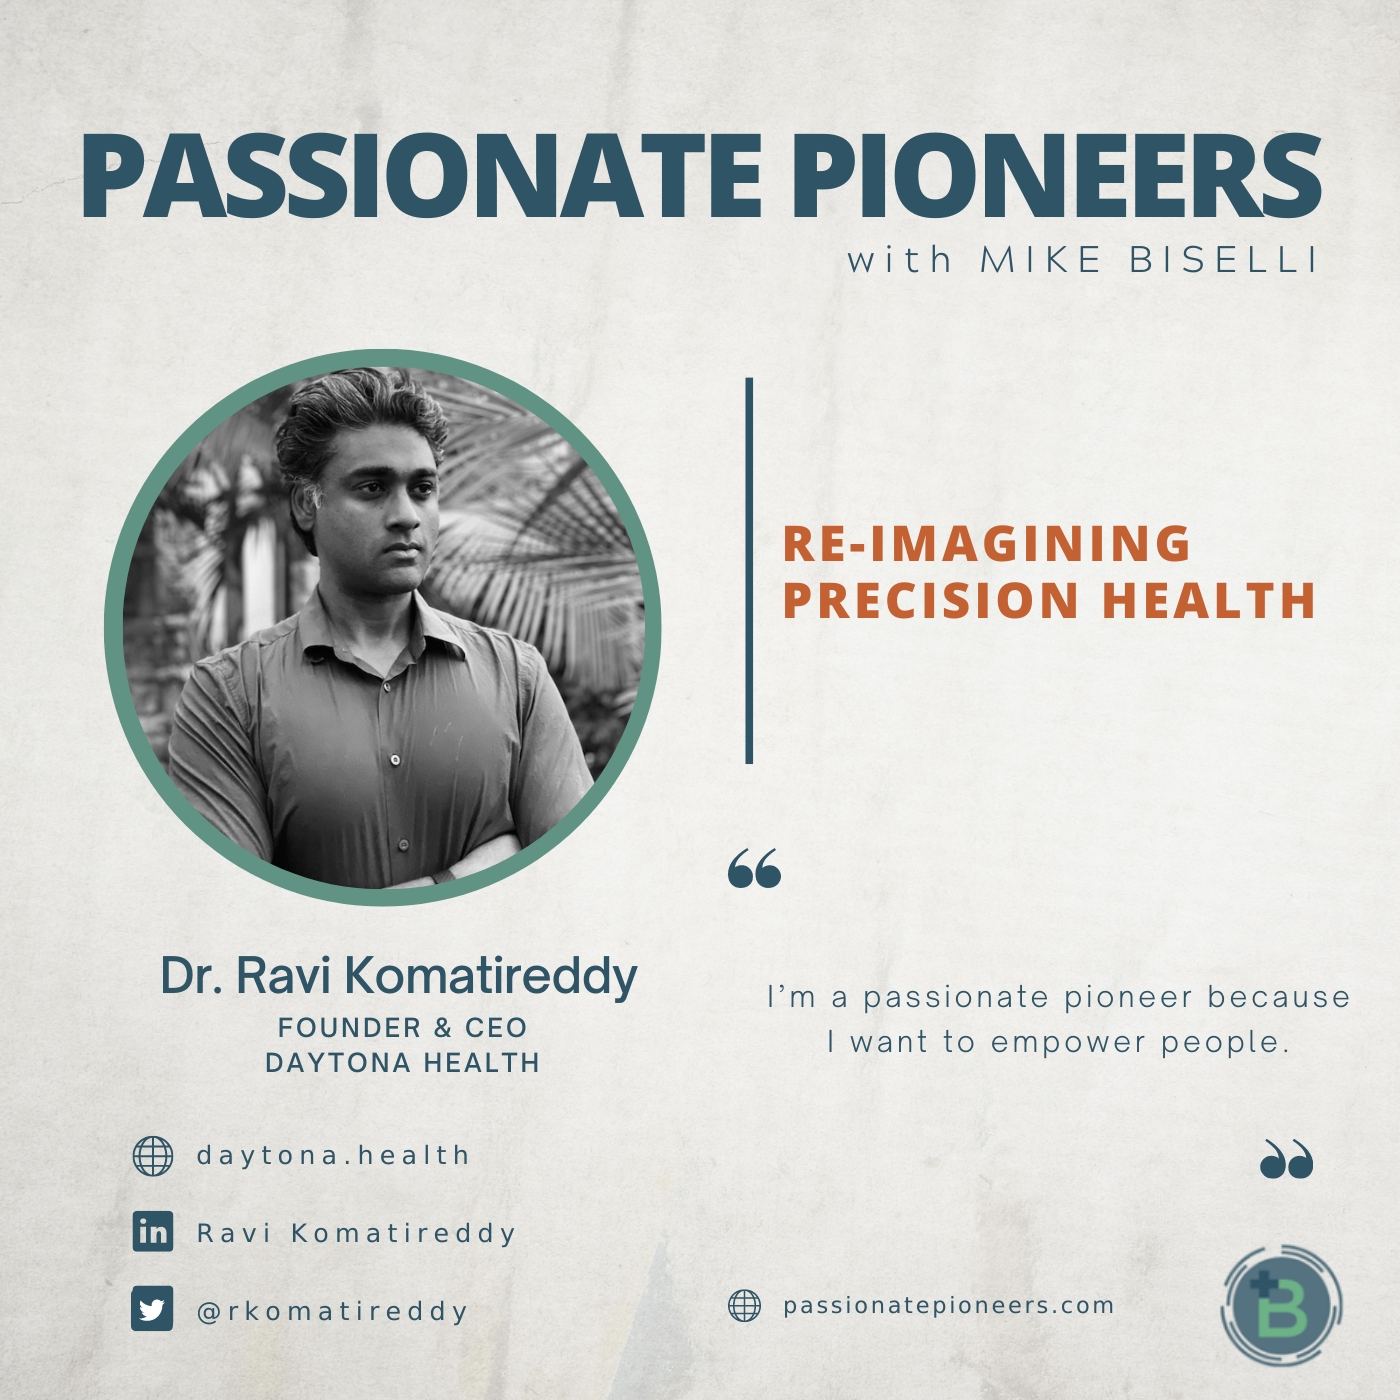 Re-imagining Precision Health with Dr. Ravi Komatireddy